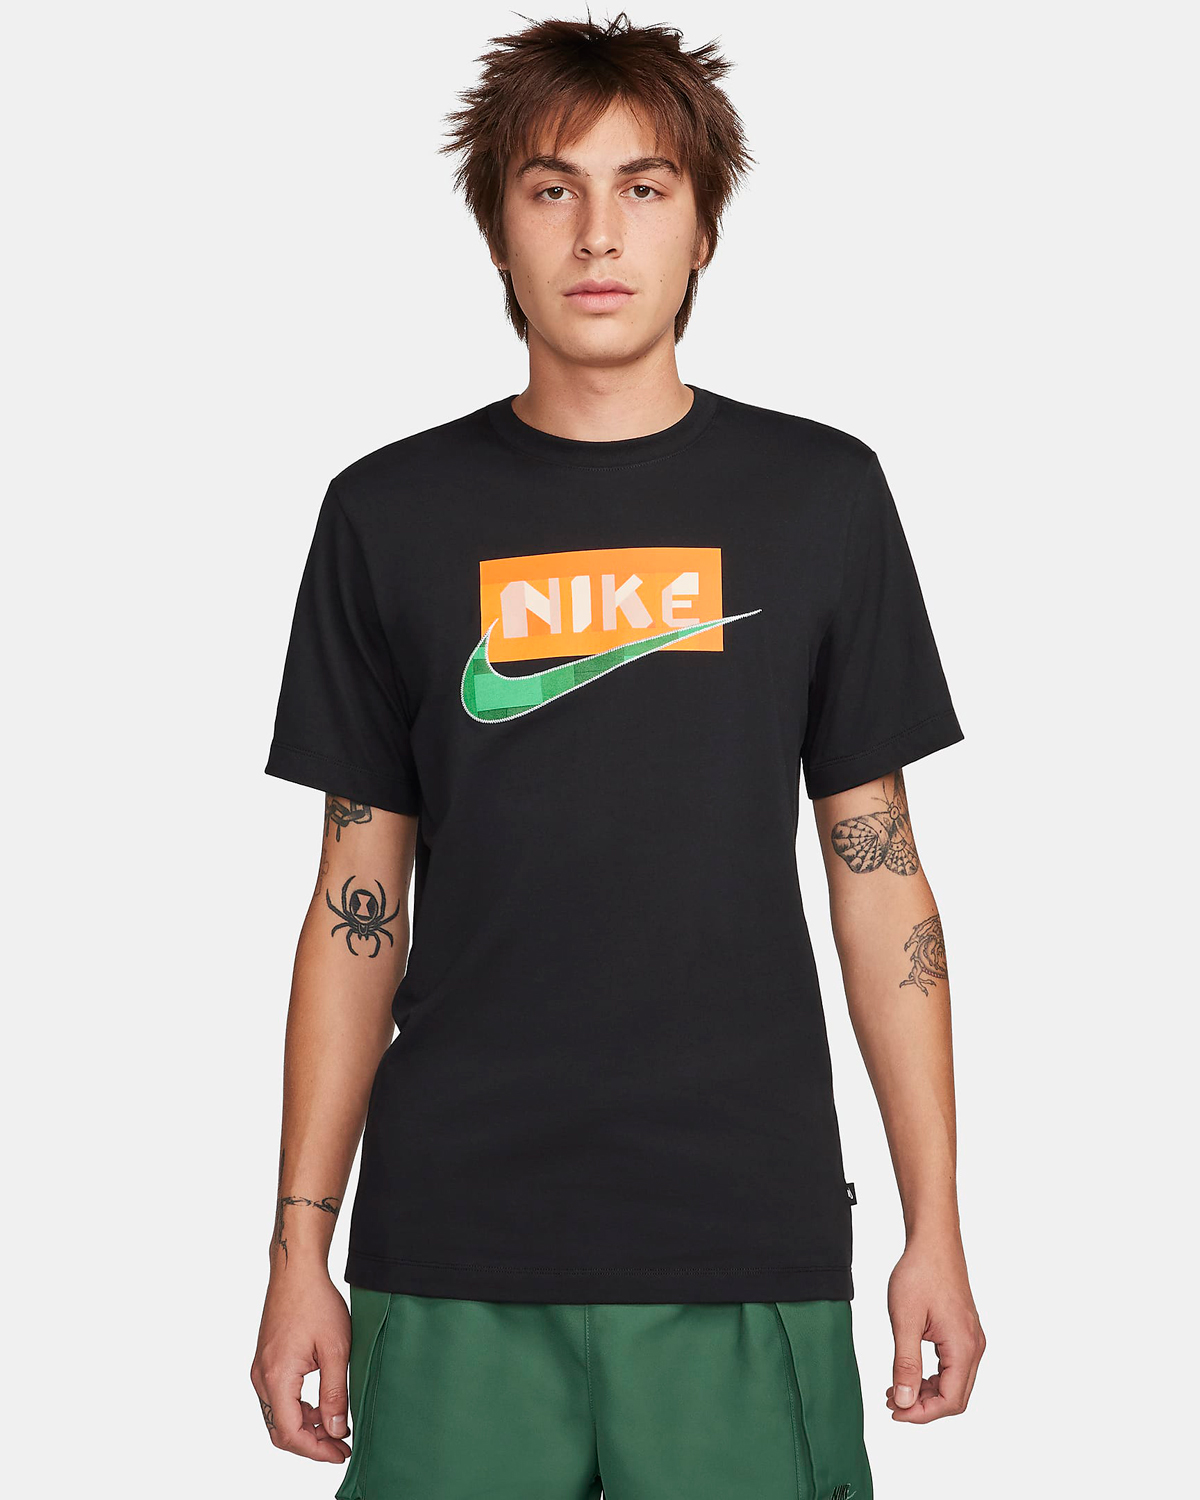 Nike-Sportswear-T-Shirt-Black-Orange-Green-1